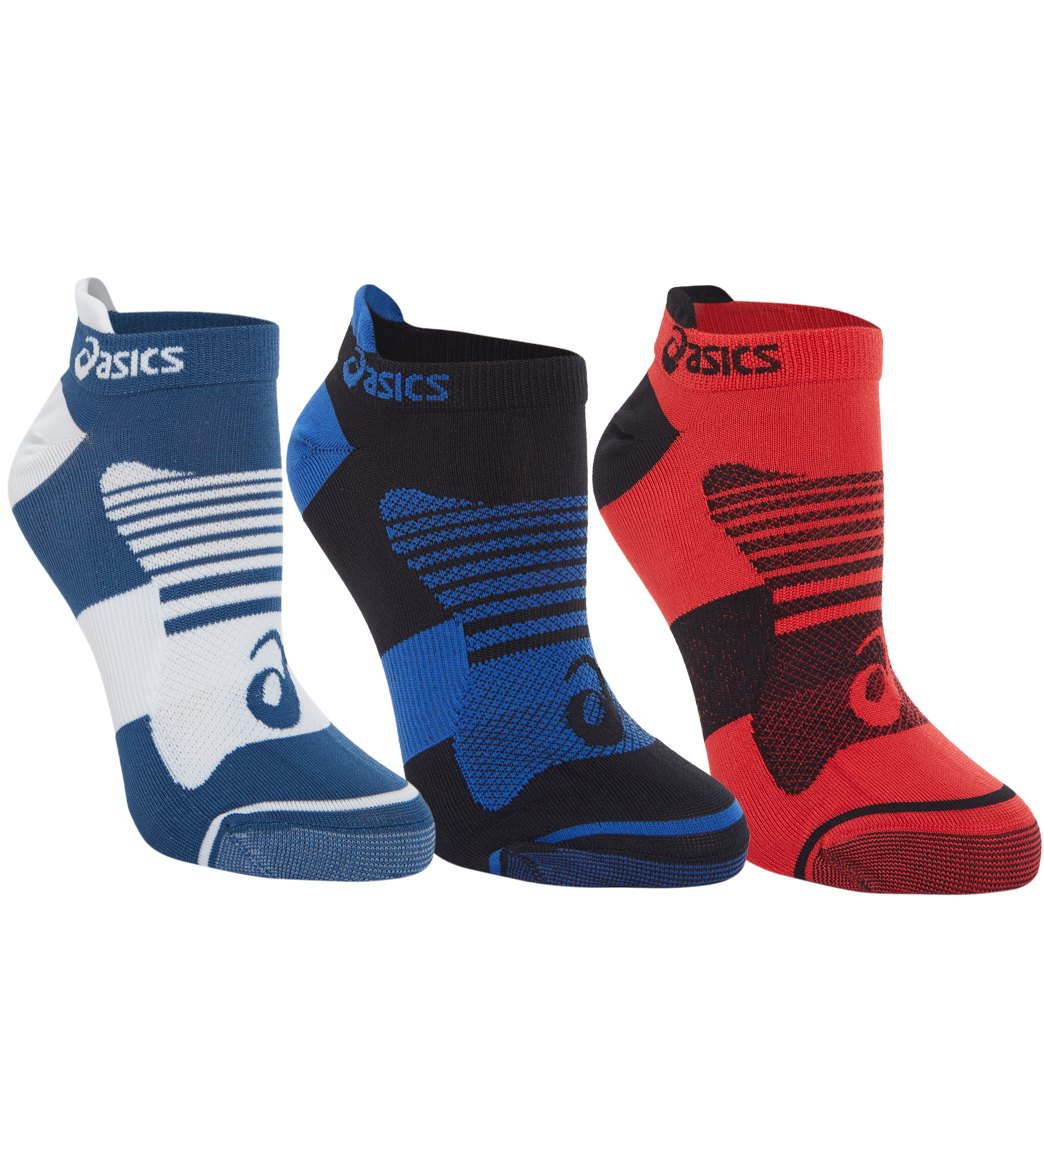 Men's quick lyte plus socks 3 pack - performance black/ blue/speed red medium black/Asics size medium - swimoutlet.com